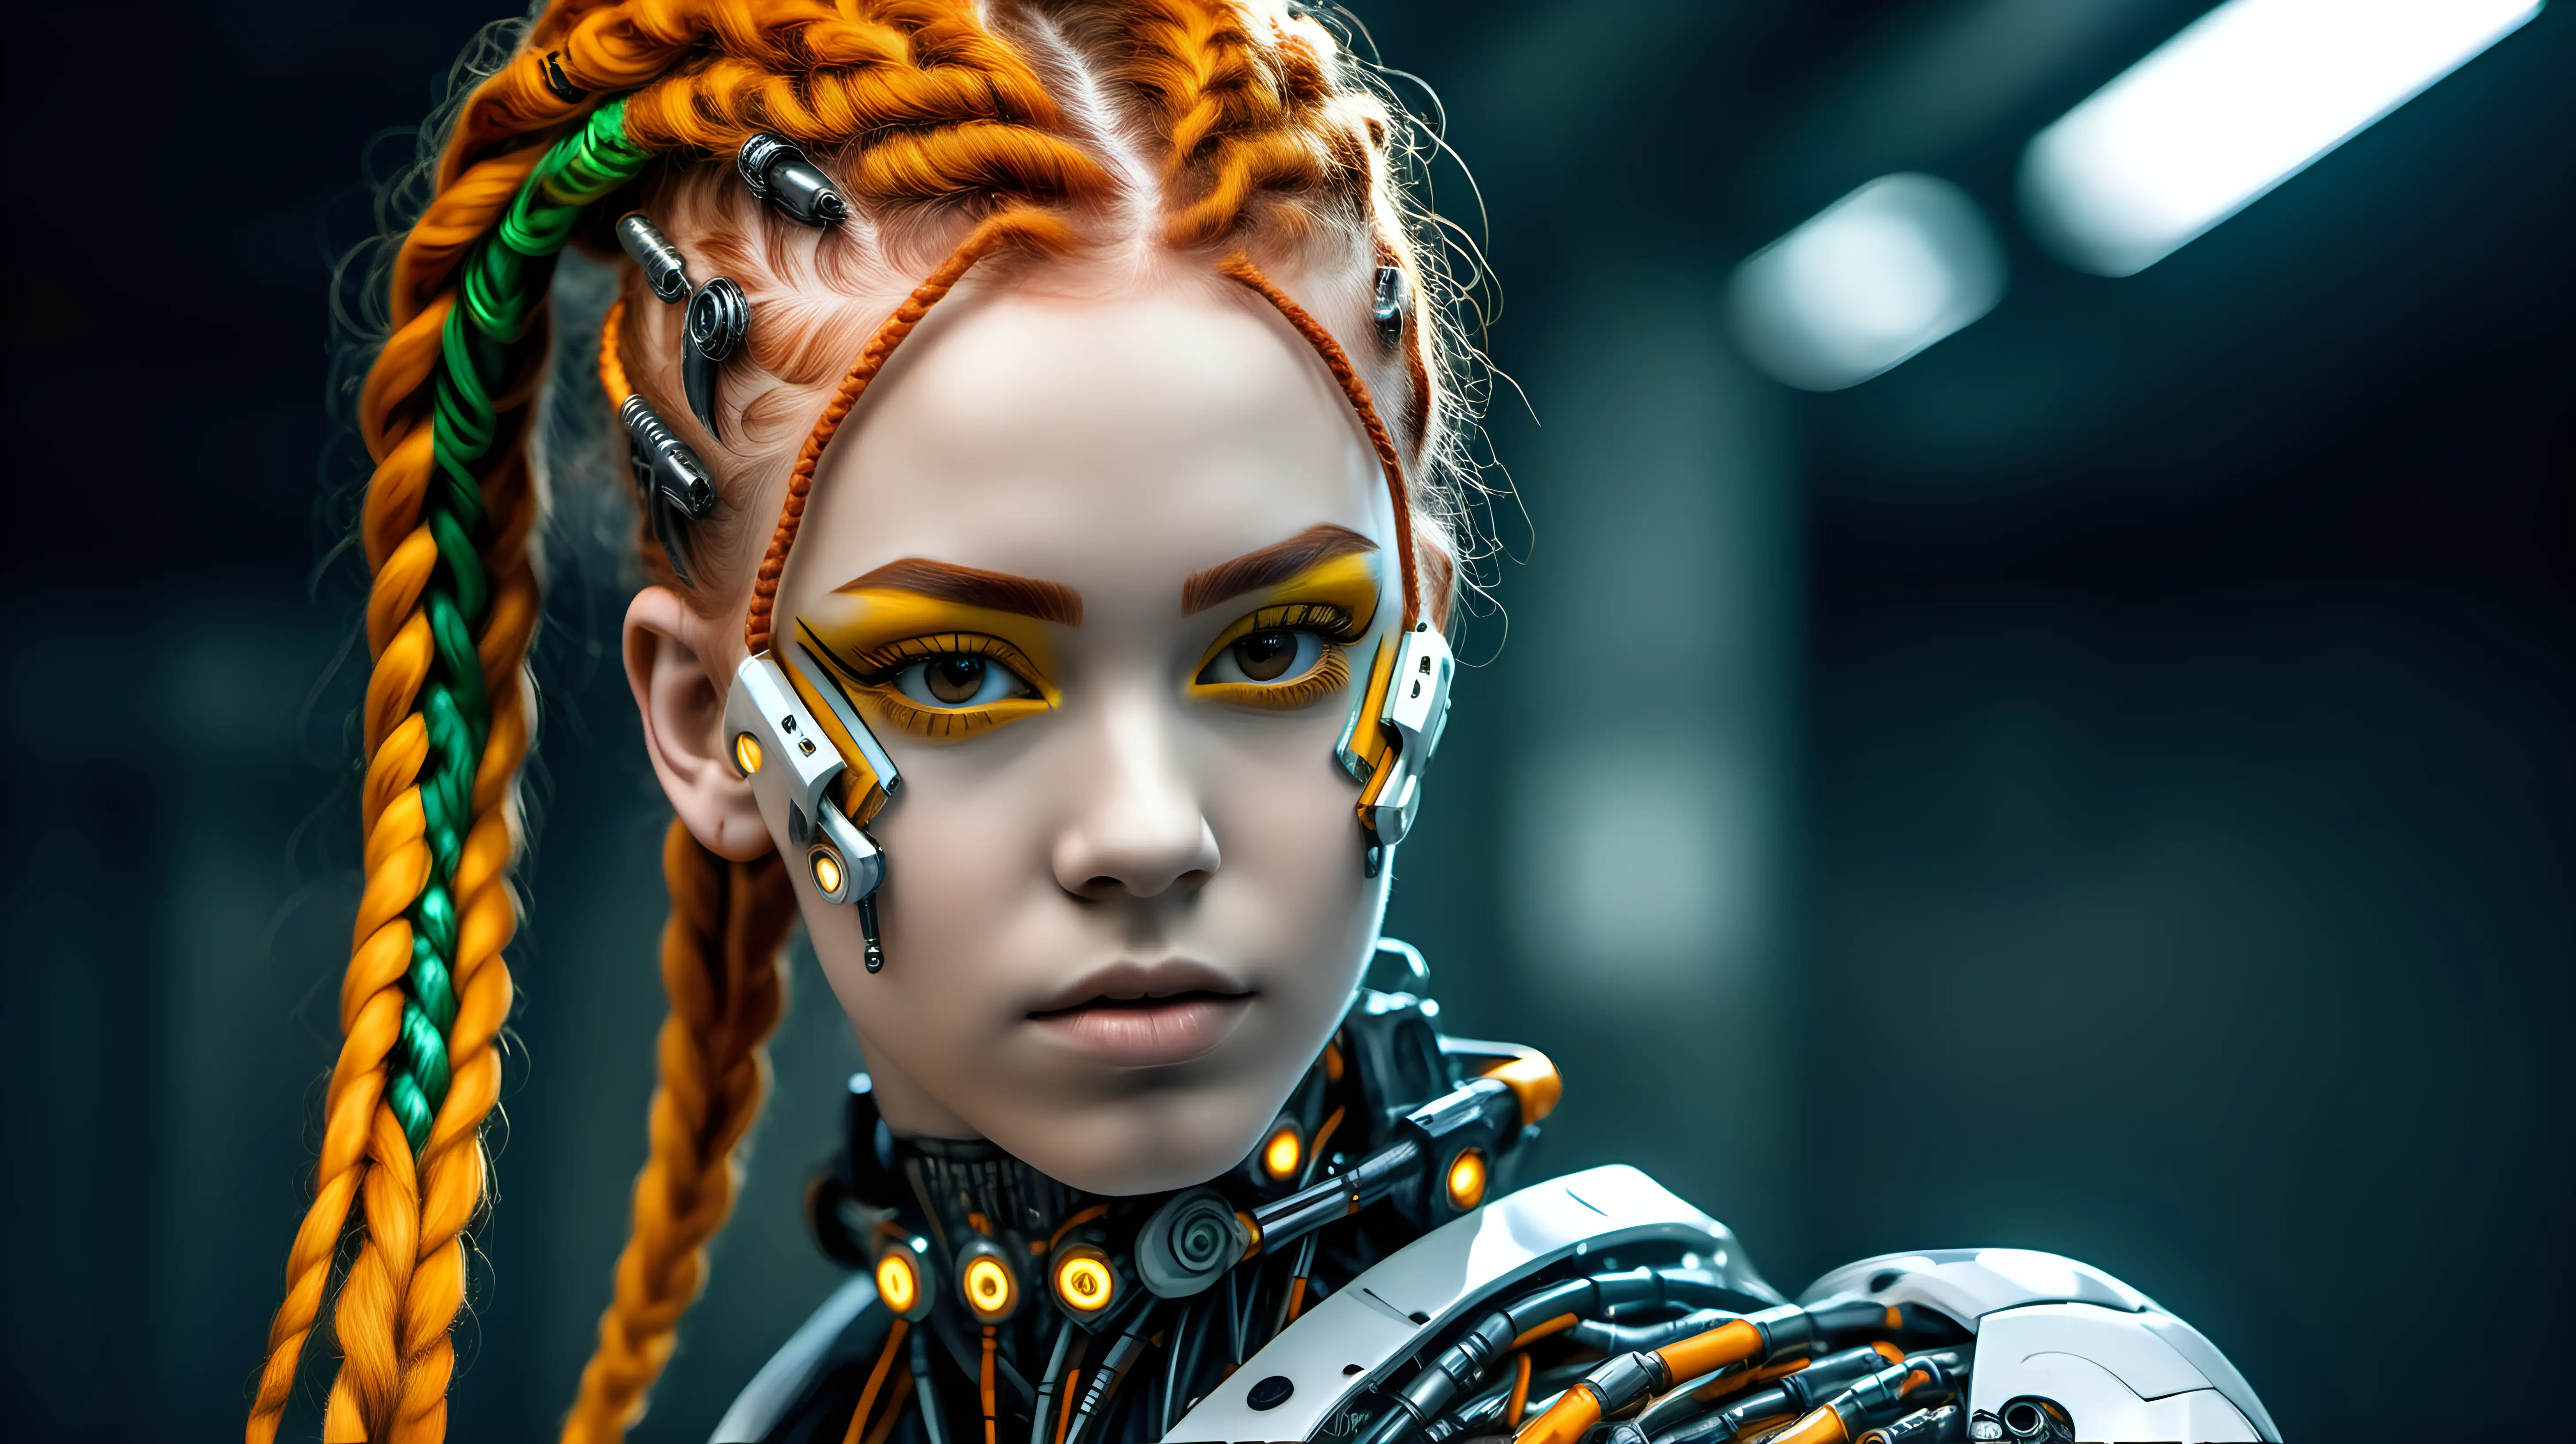 Futuristic Beauty Stunning Cyborg Couple with Vibrant Multicolored Braids